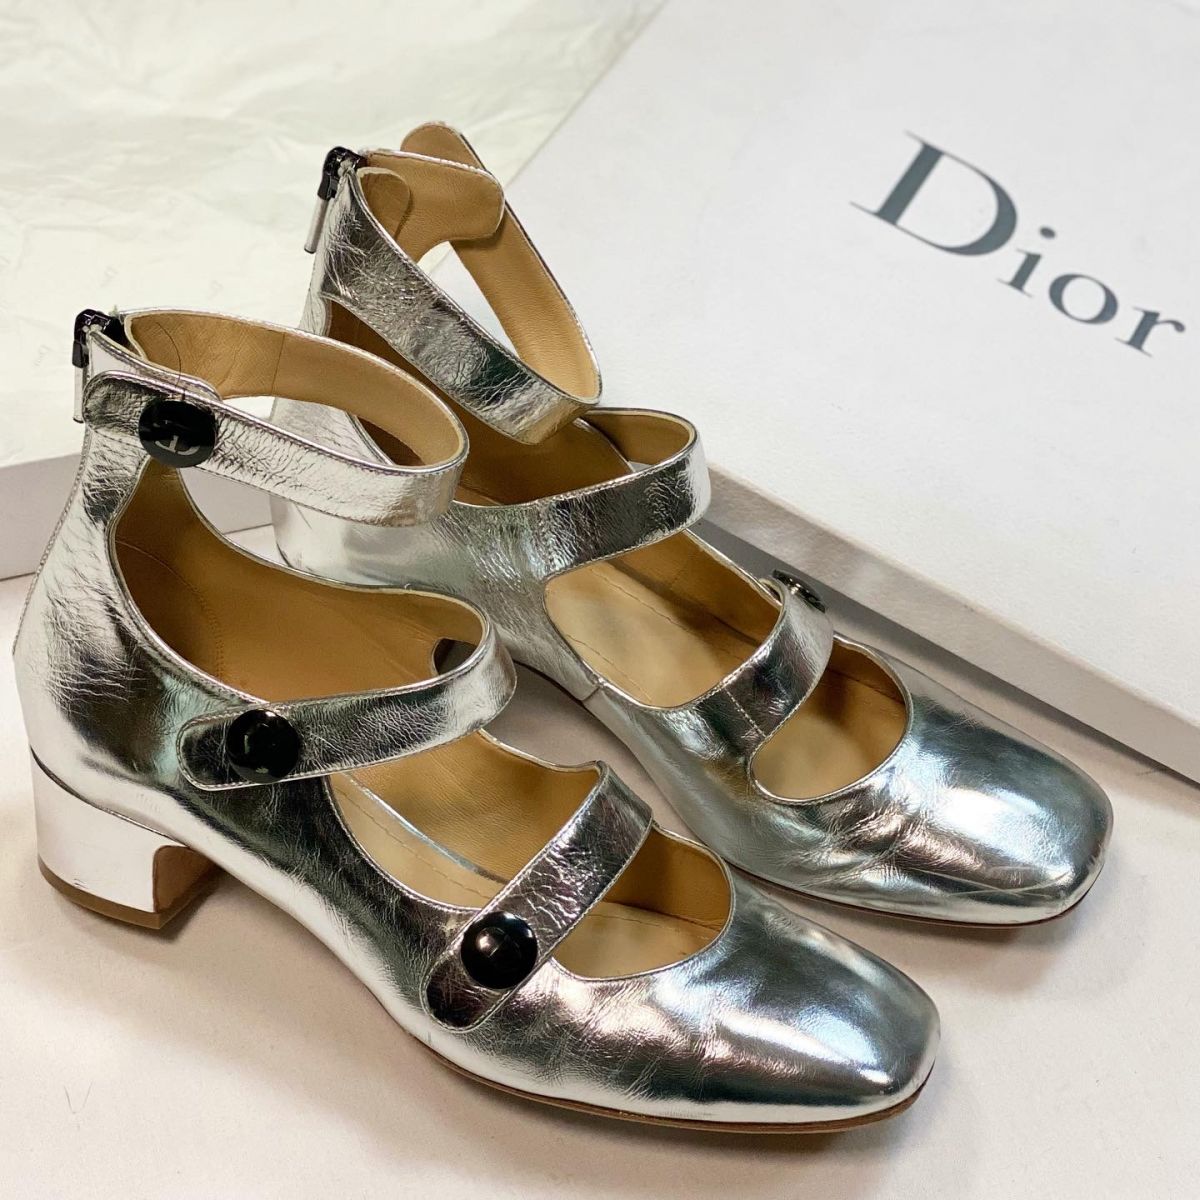 Туфли Christian Dior размер 39 цена 30 770 руб 